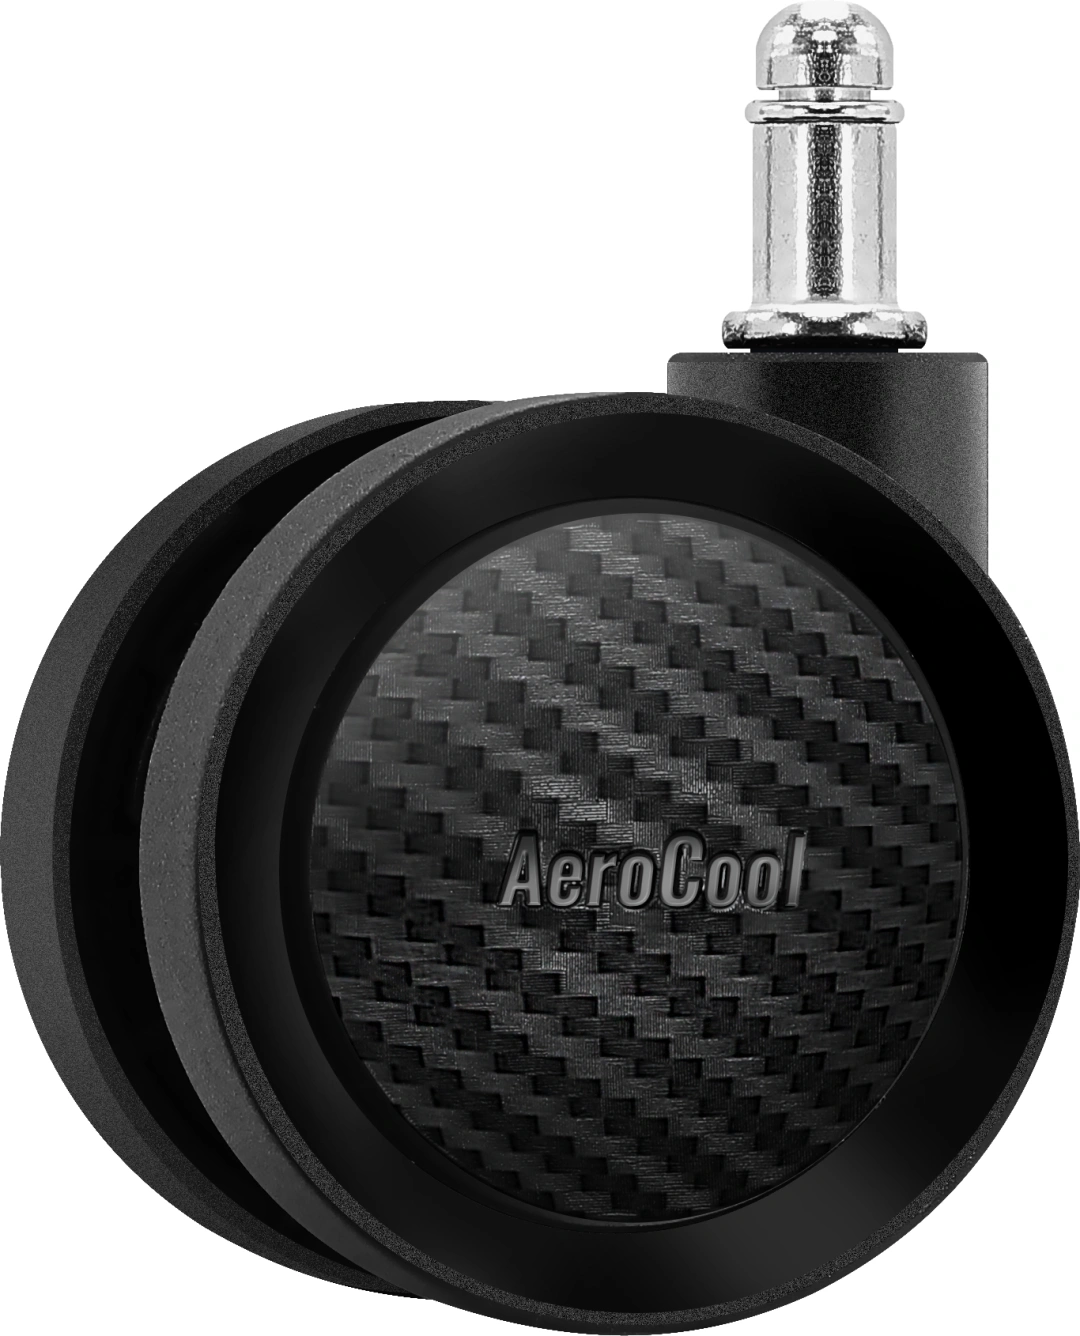 Aerocool CROWN AeroWeave, black